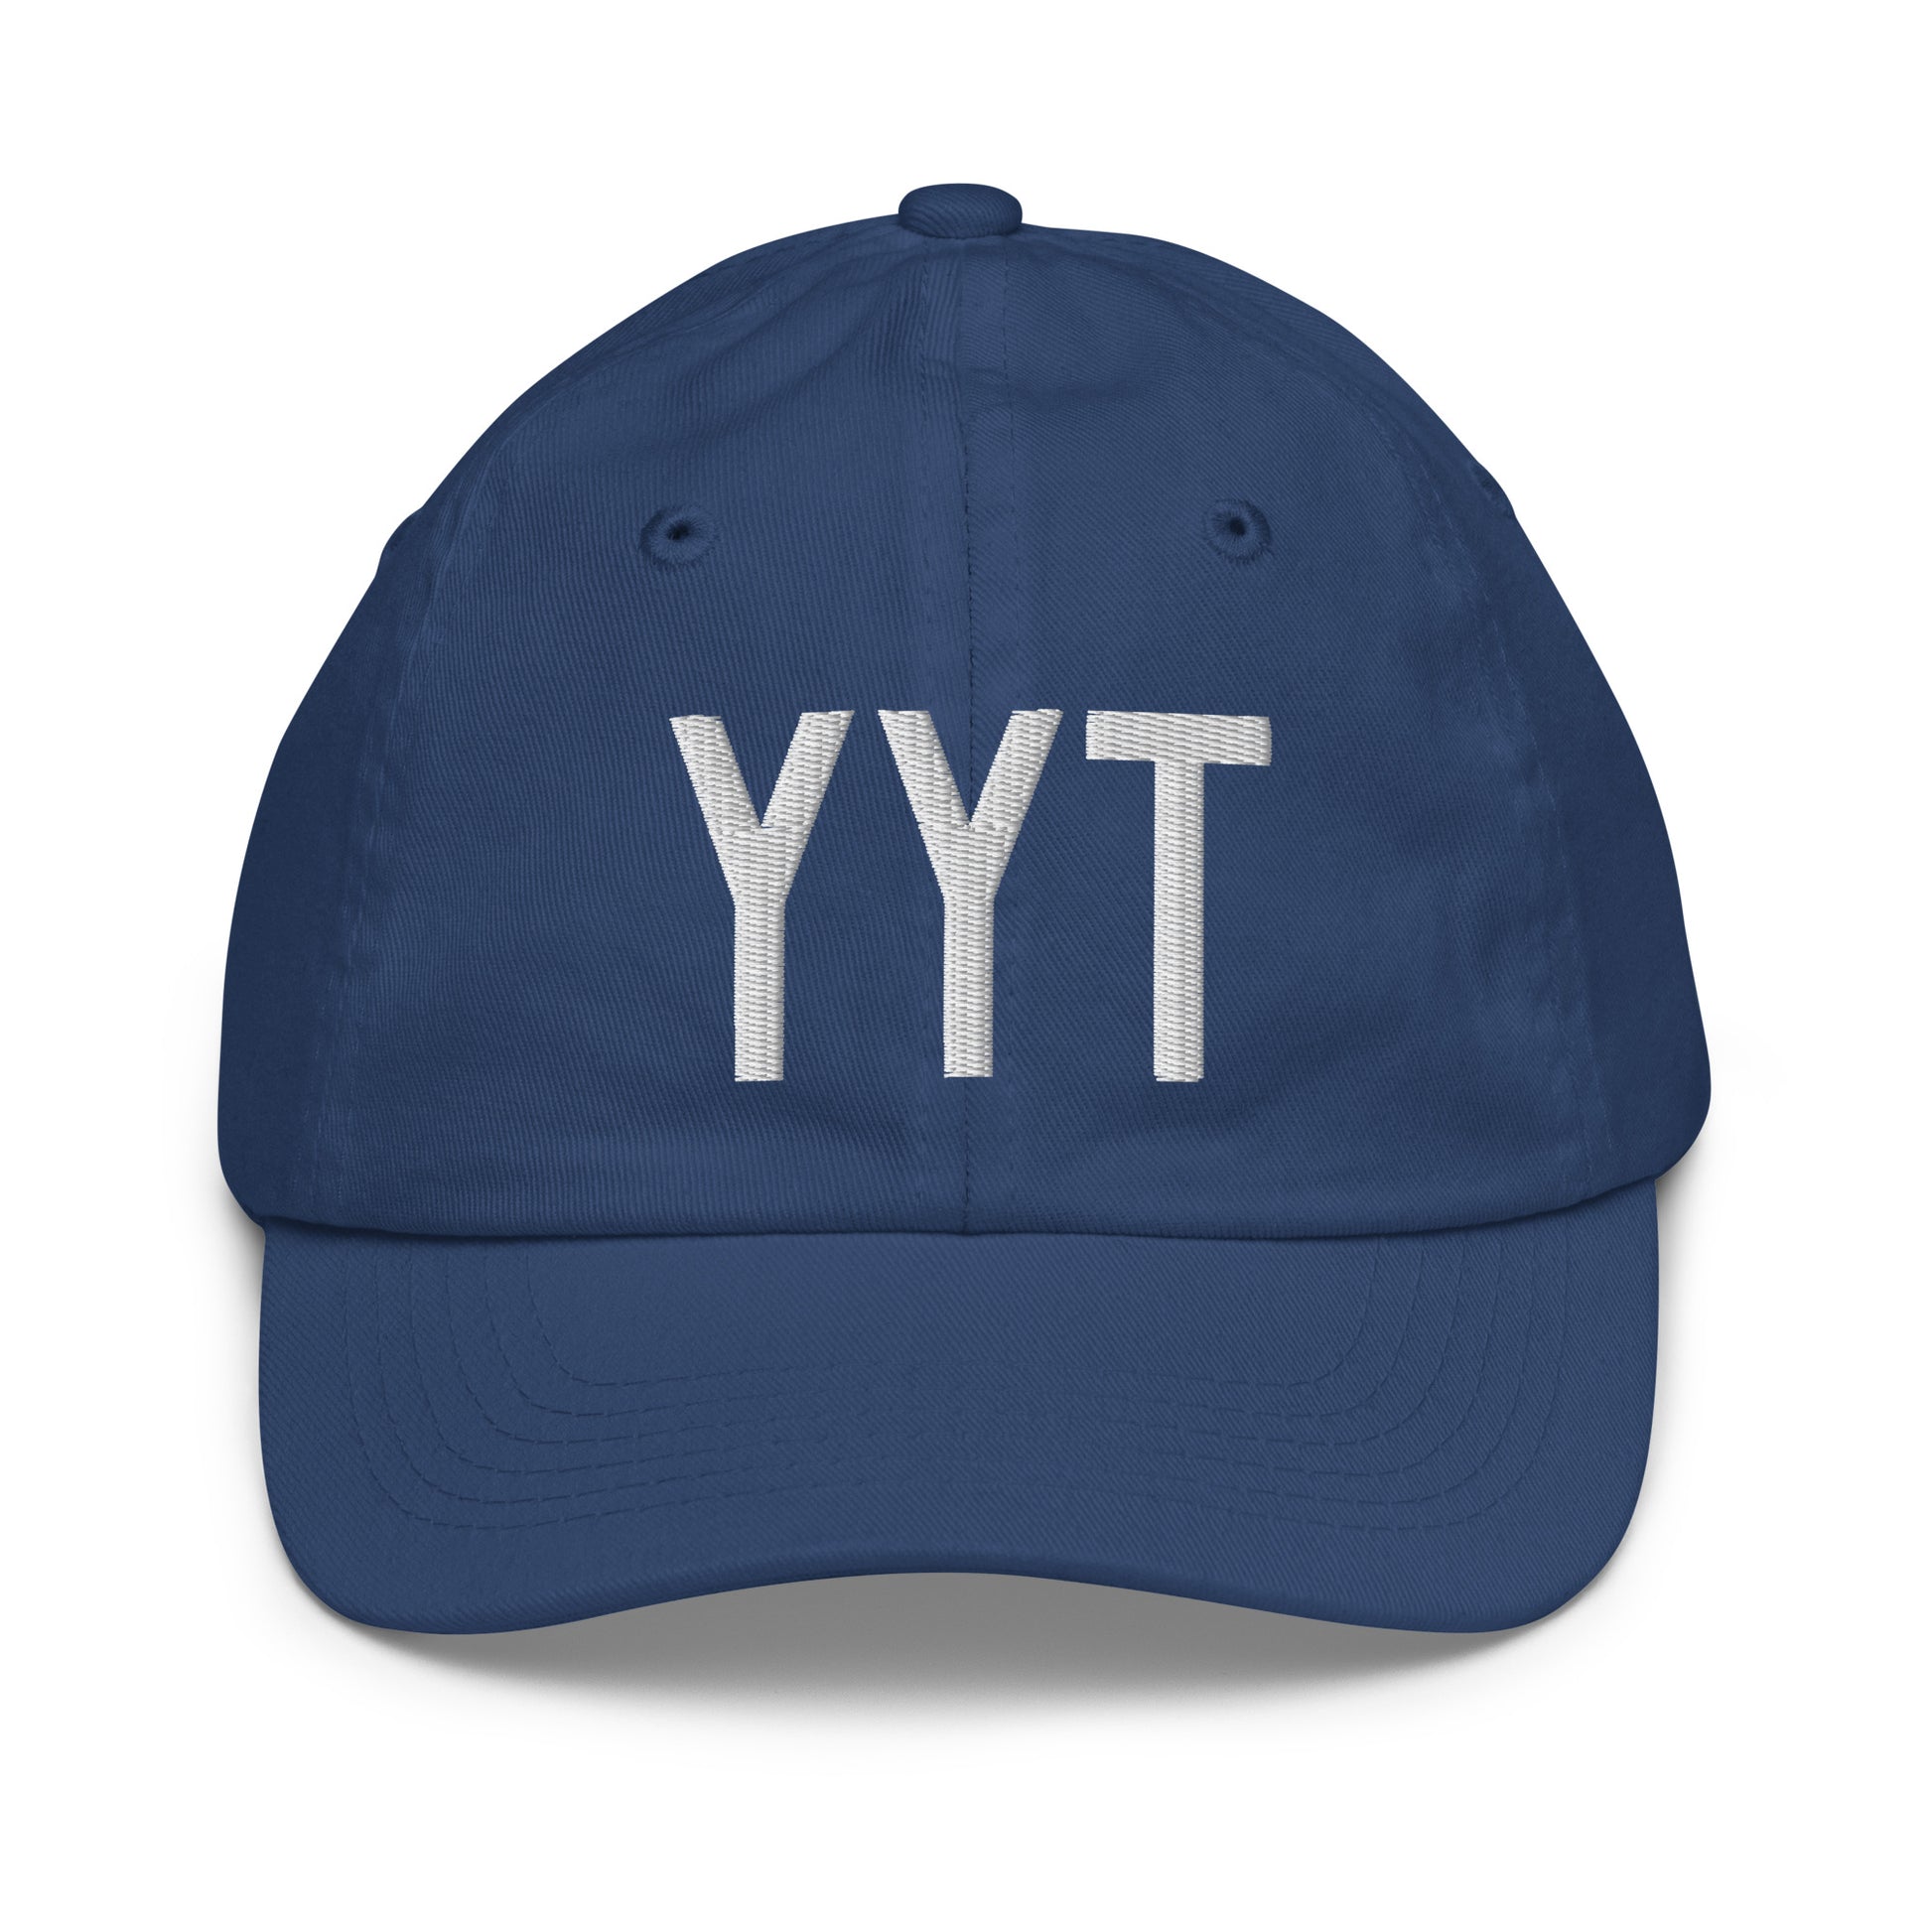 Airport Code Kid's Baseball Cap - White • YYT St. John's • YHM Designs - Image 20